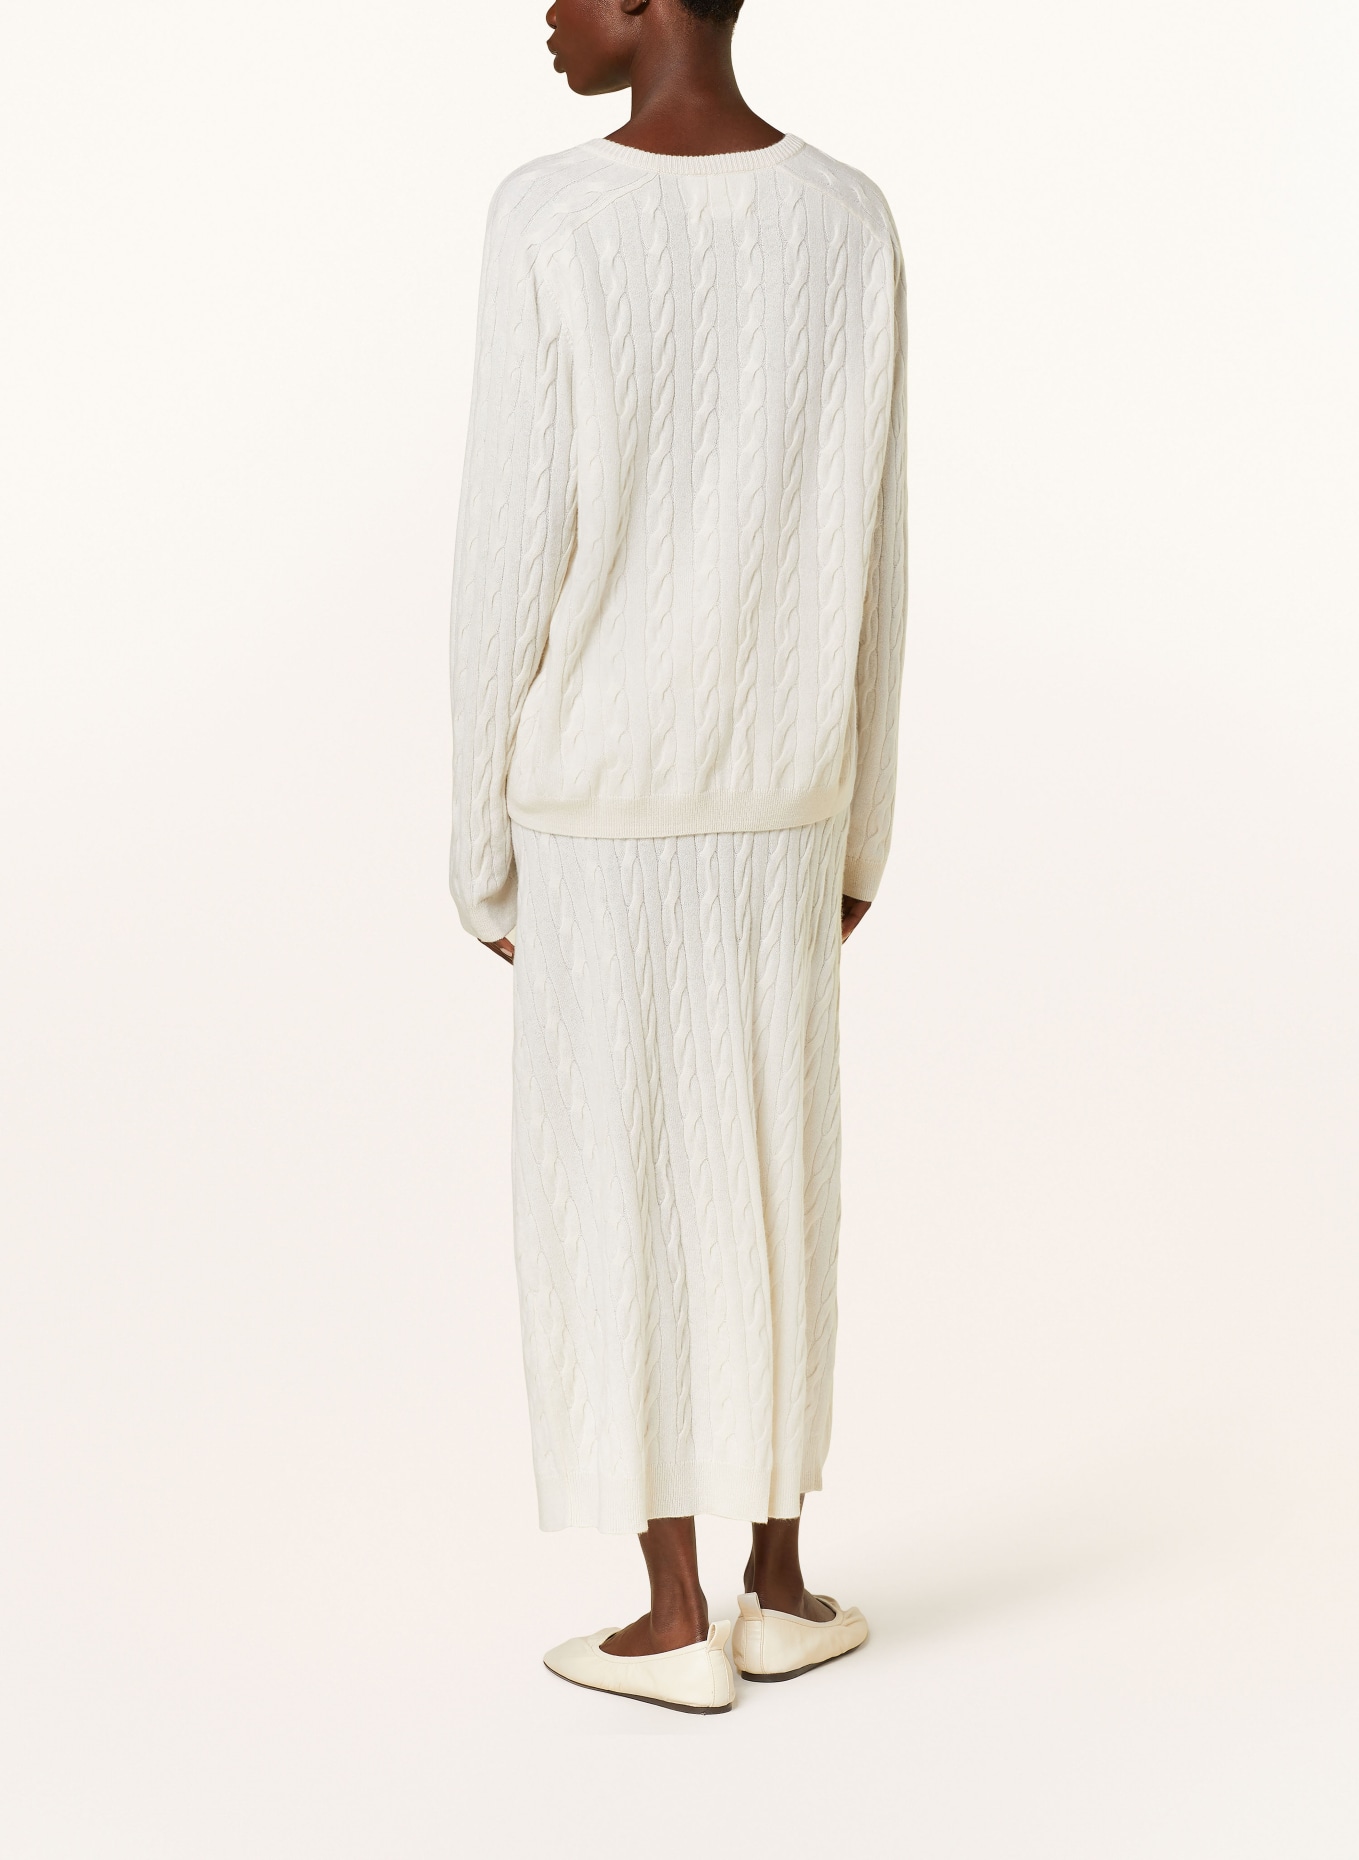 LISA YANG Cashmere-Pullover, Farbe: ECRU (Bild 3)